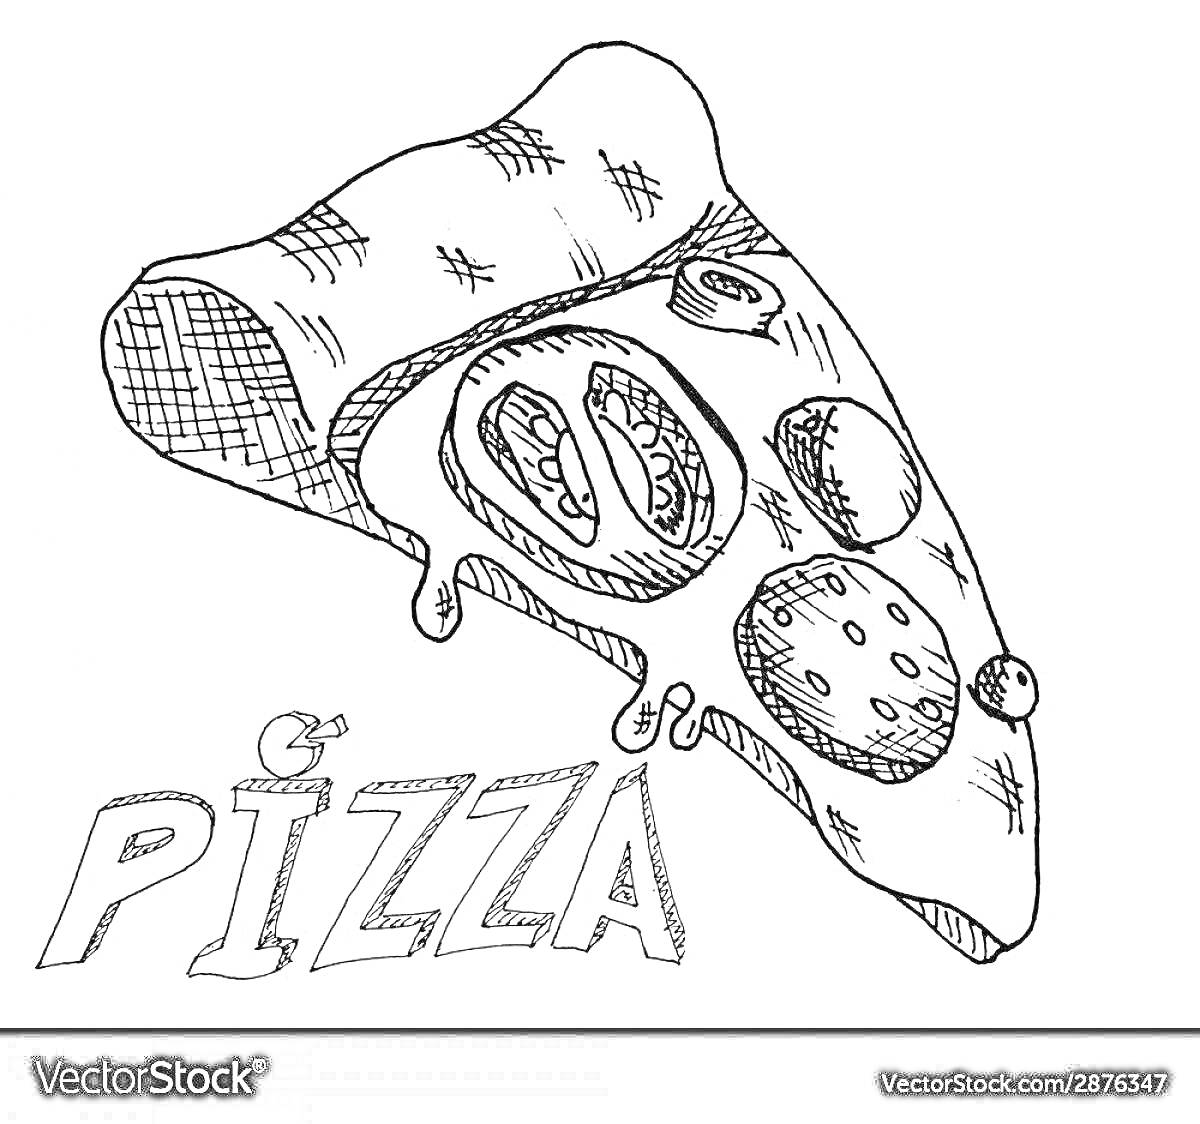 На раскраске изображено: Пицца, Кусок пиццы, Реклама, Еда, Грибы, Перец, Колбаса, Надпись